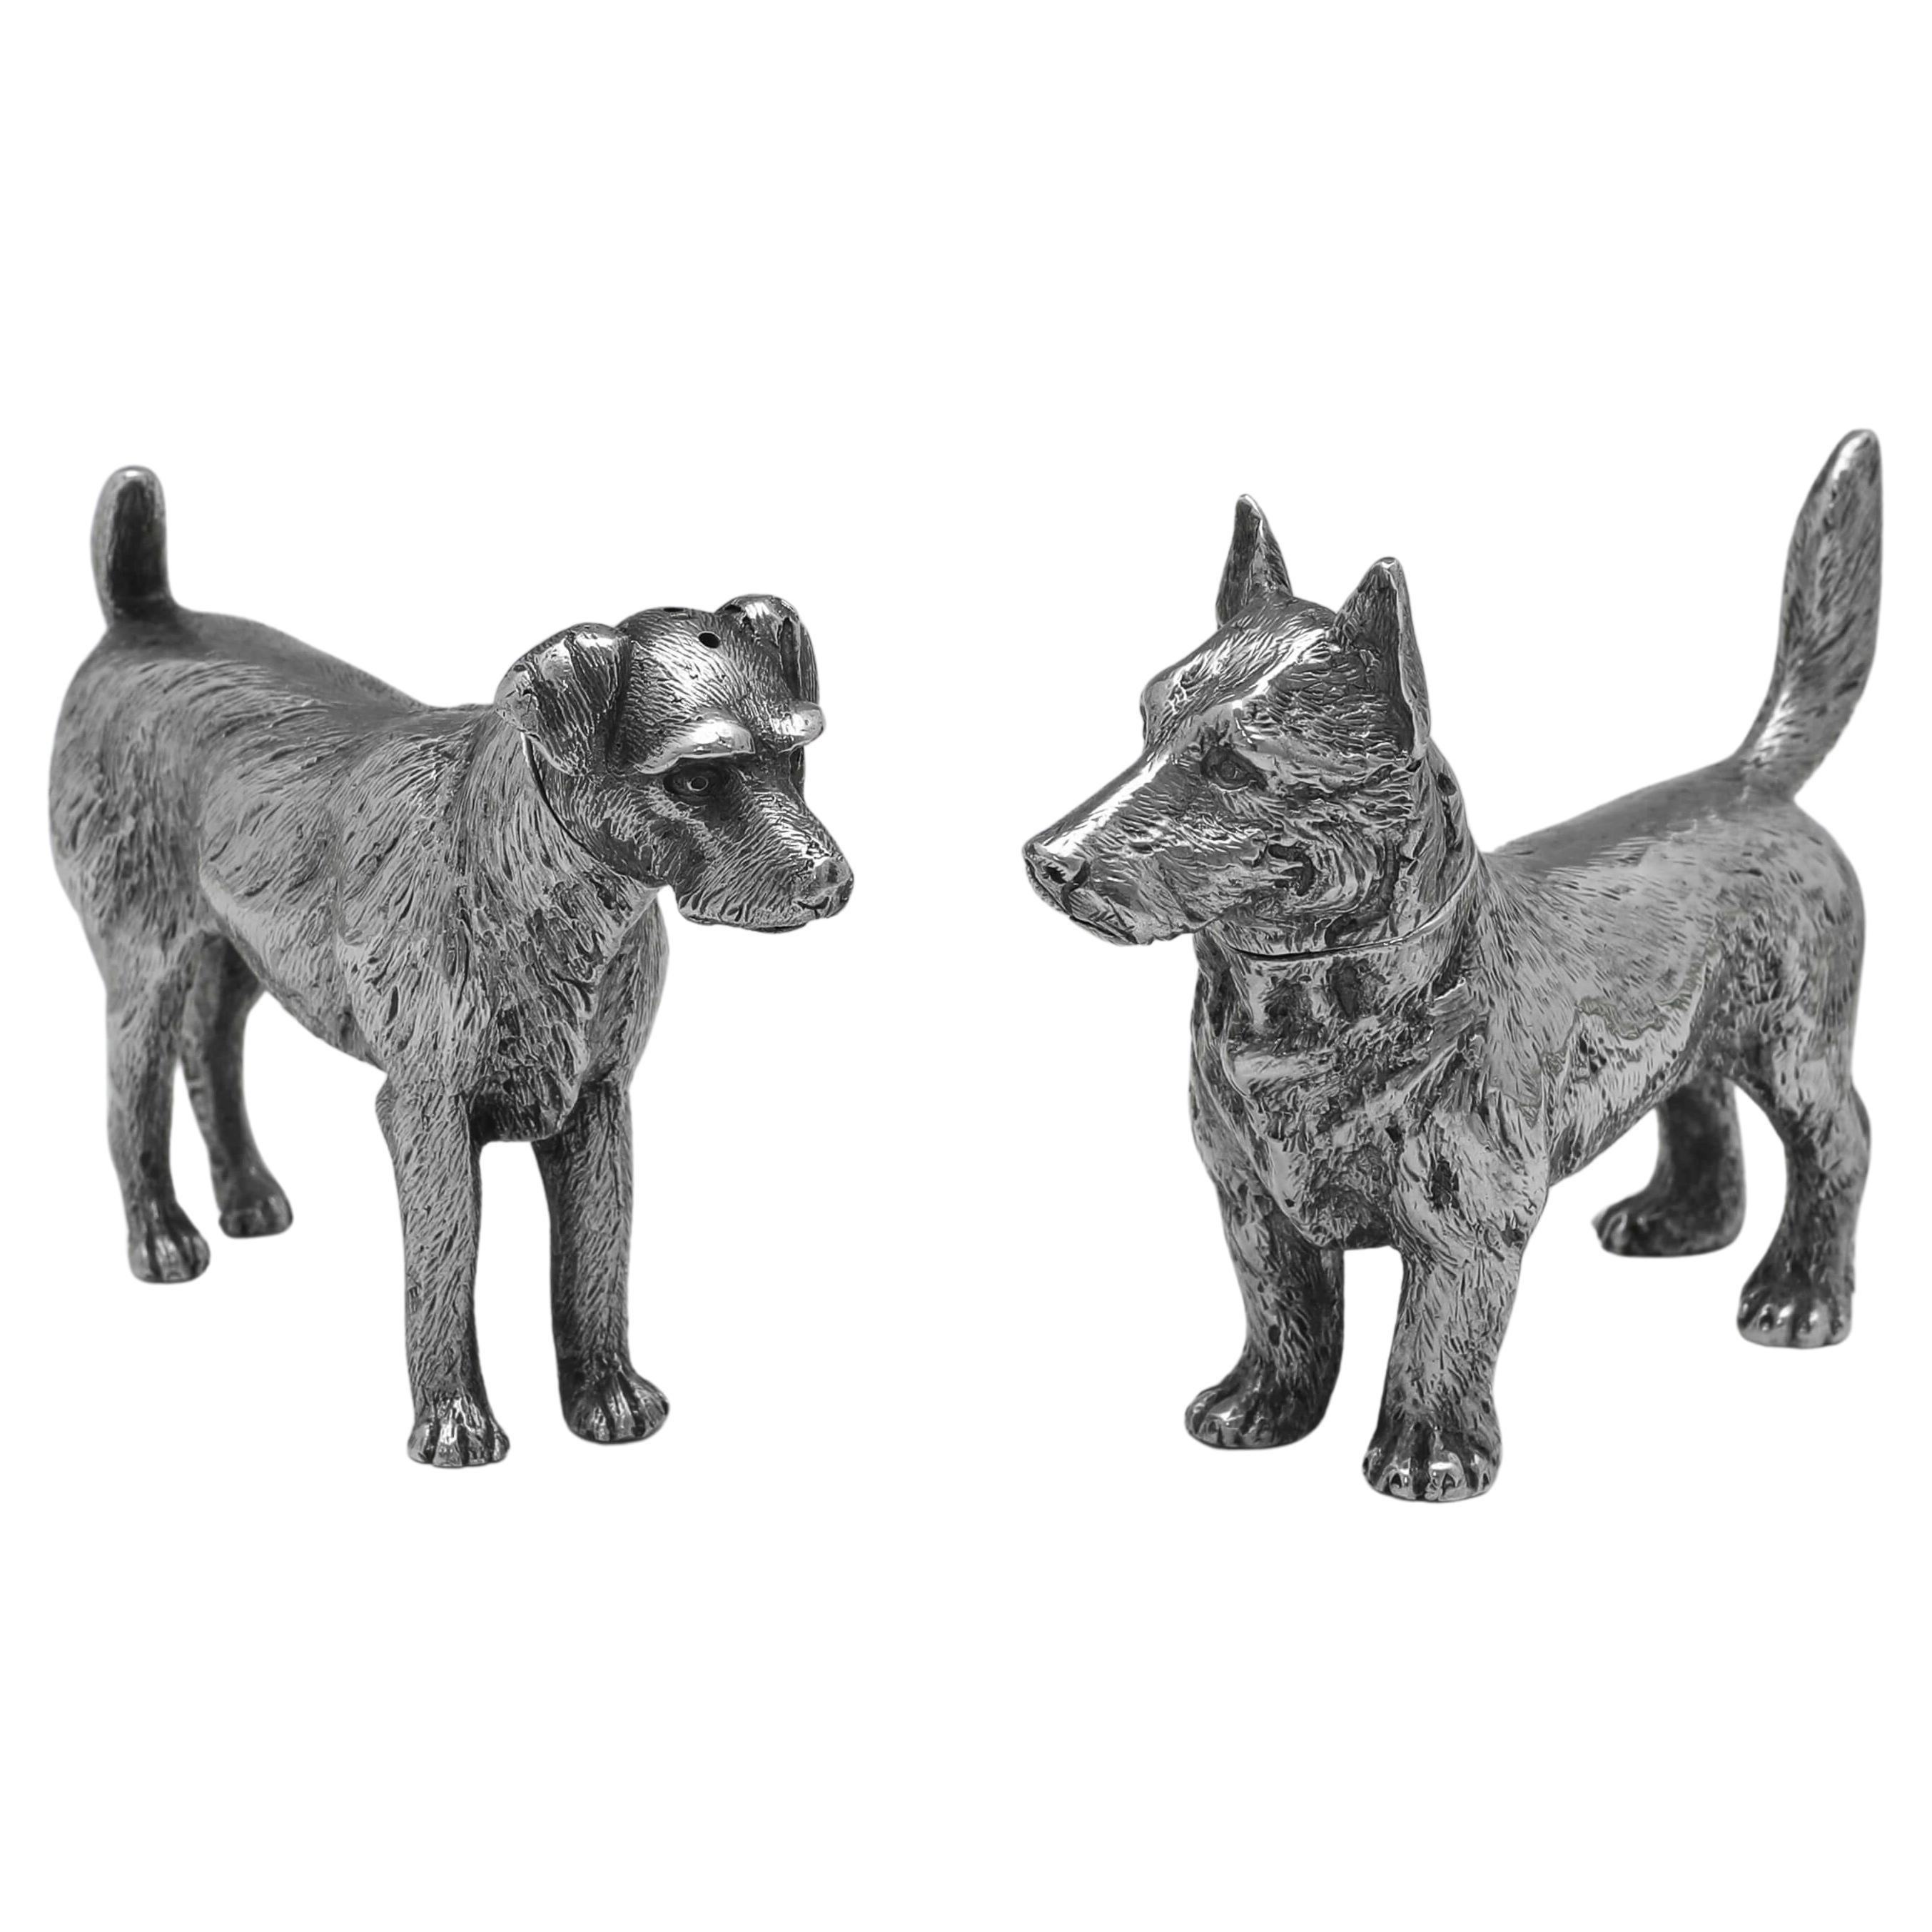 Rare Pair of Edwardian Sterling Silver Dog Pepper Pots - Terrier Models - 1904 For Sale